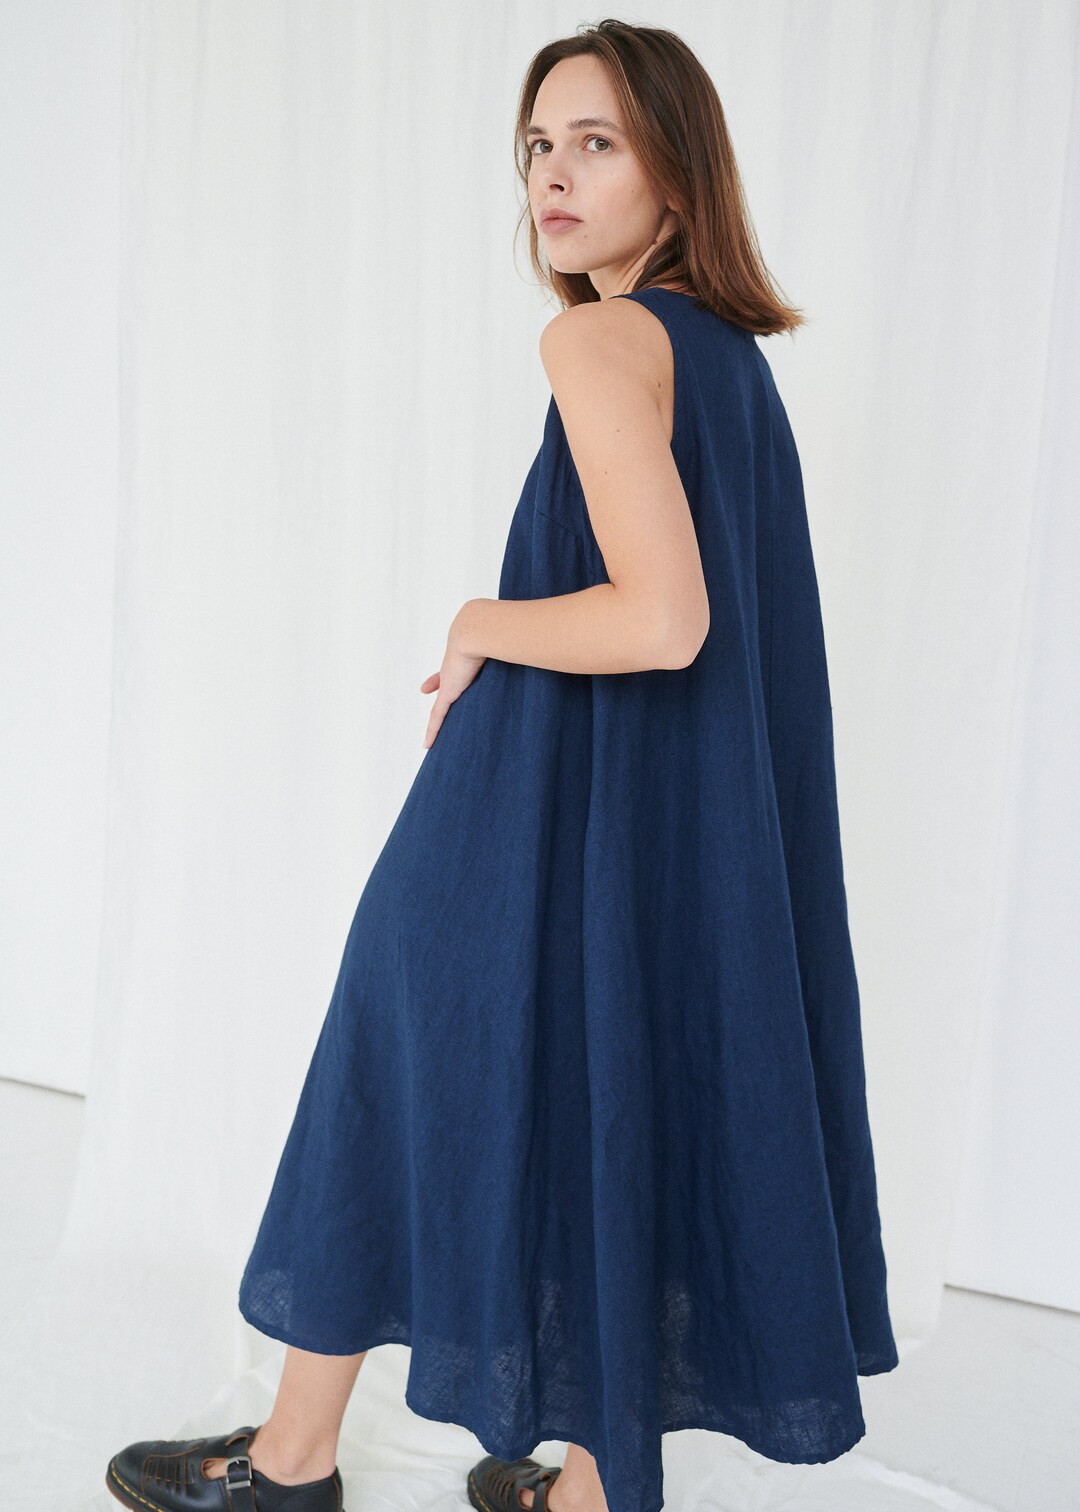 Sahara Navy Blue Dress Maxi Linen Dress Oversized Linen - Etsy